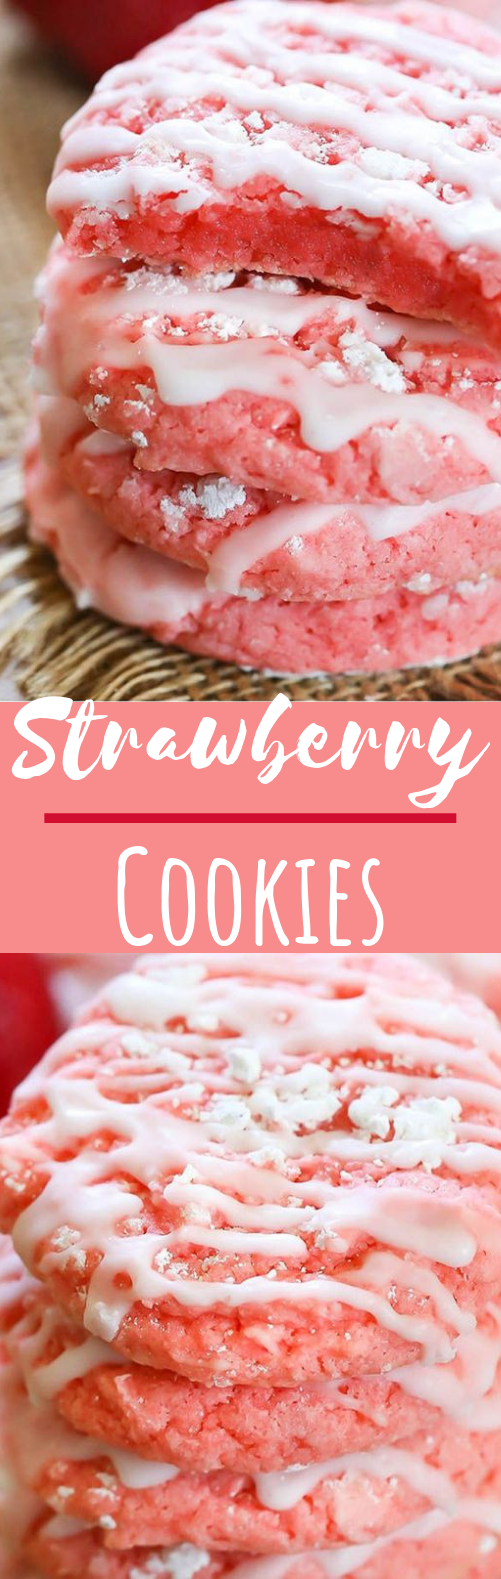 Strawberry Cookies #desserts #cookies